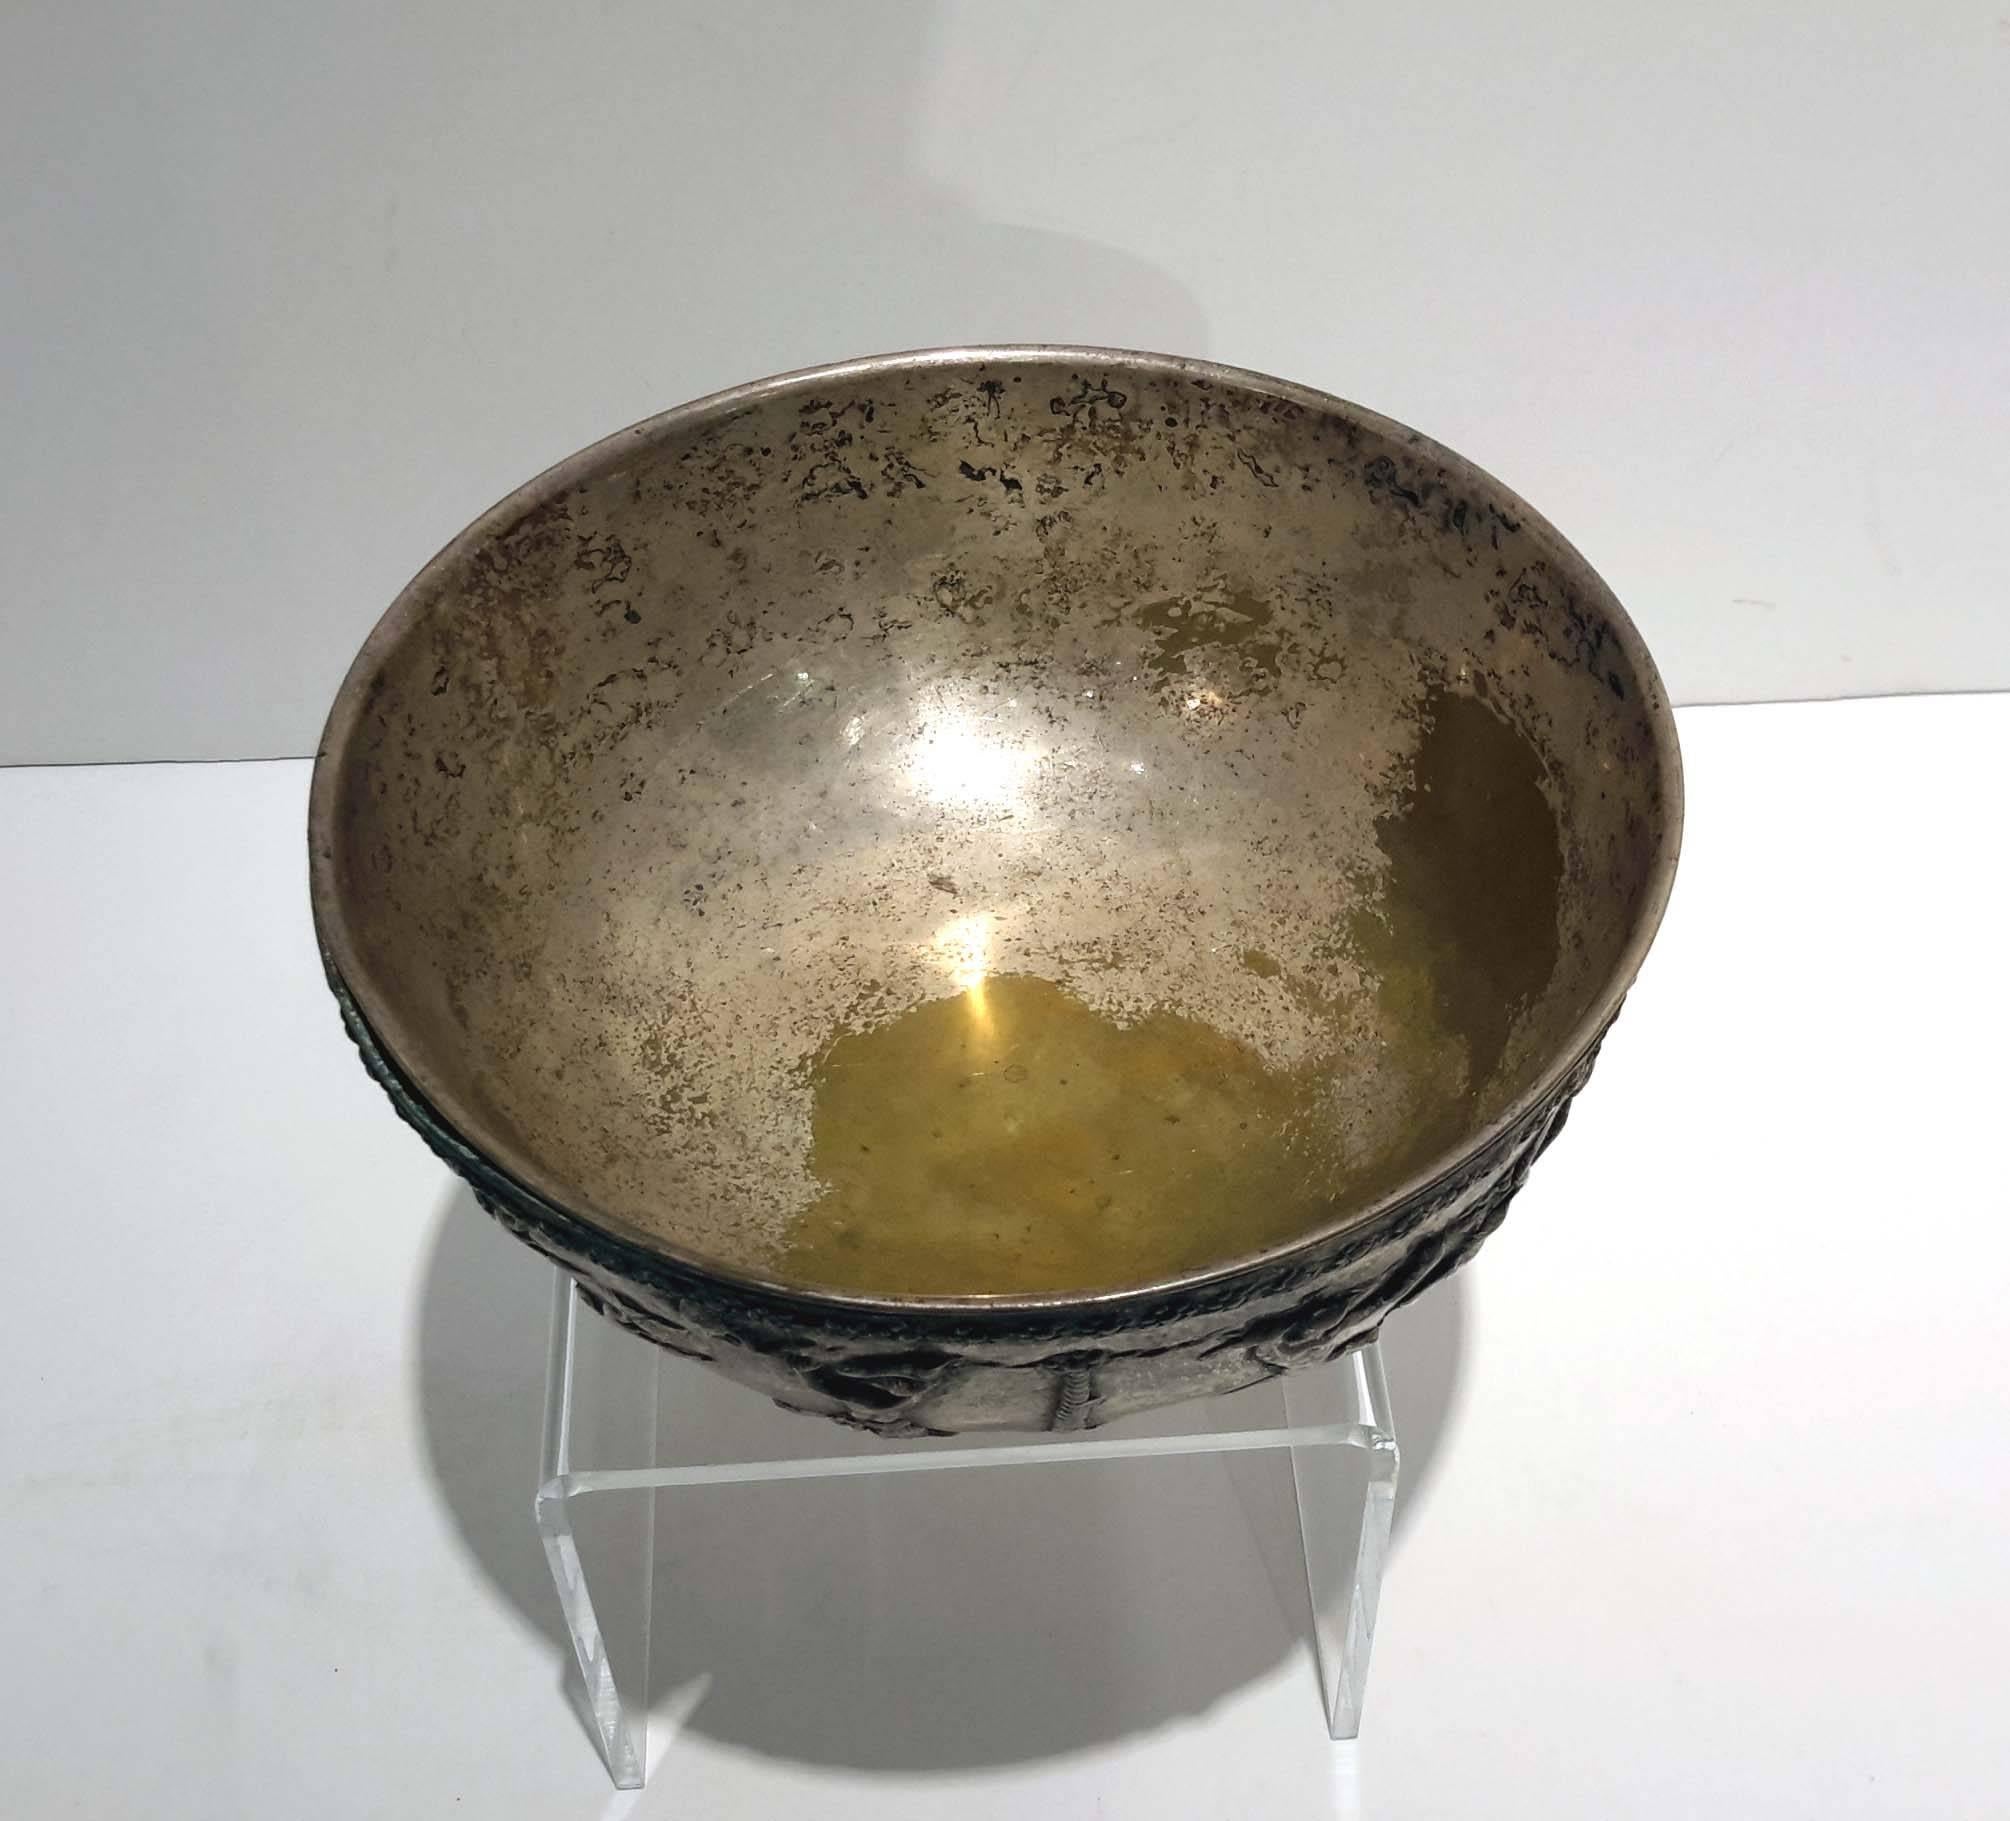 E.F. Caldwell & Co. Inc. classical revival silver plate bowl.